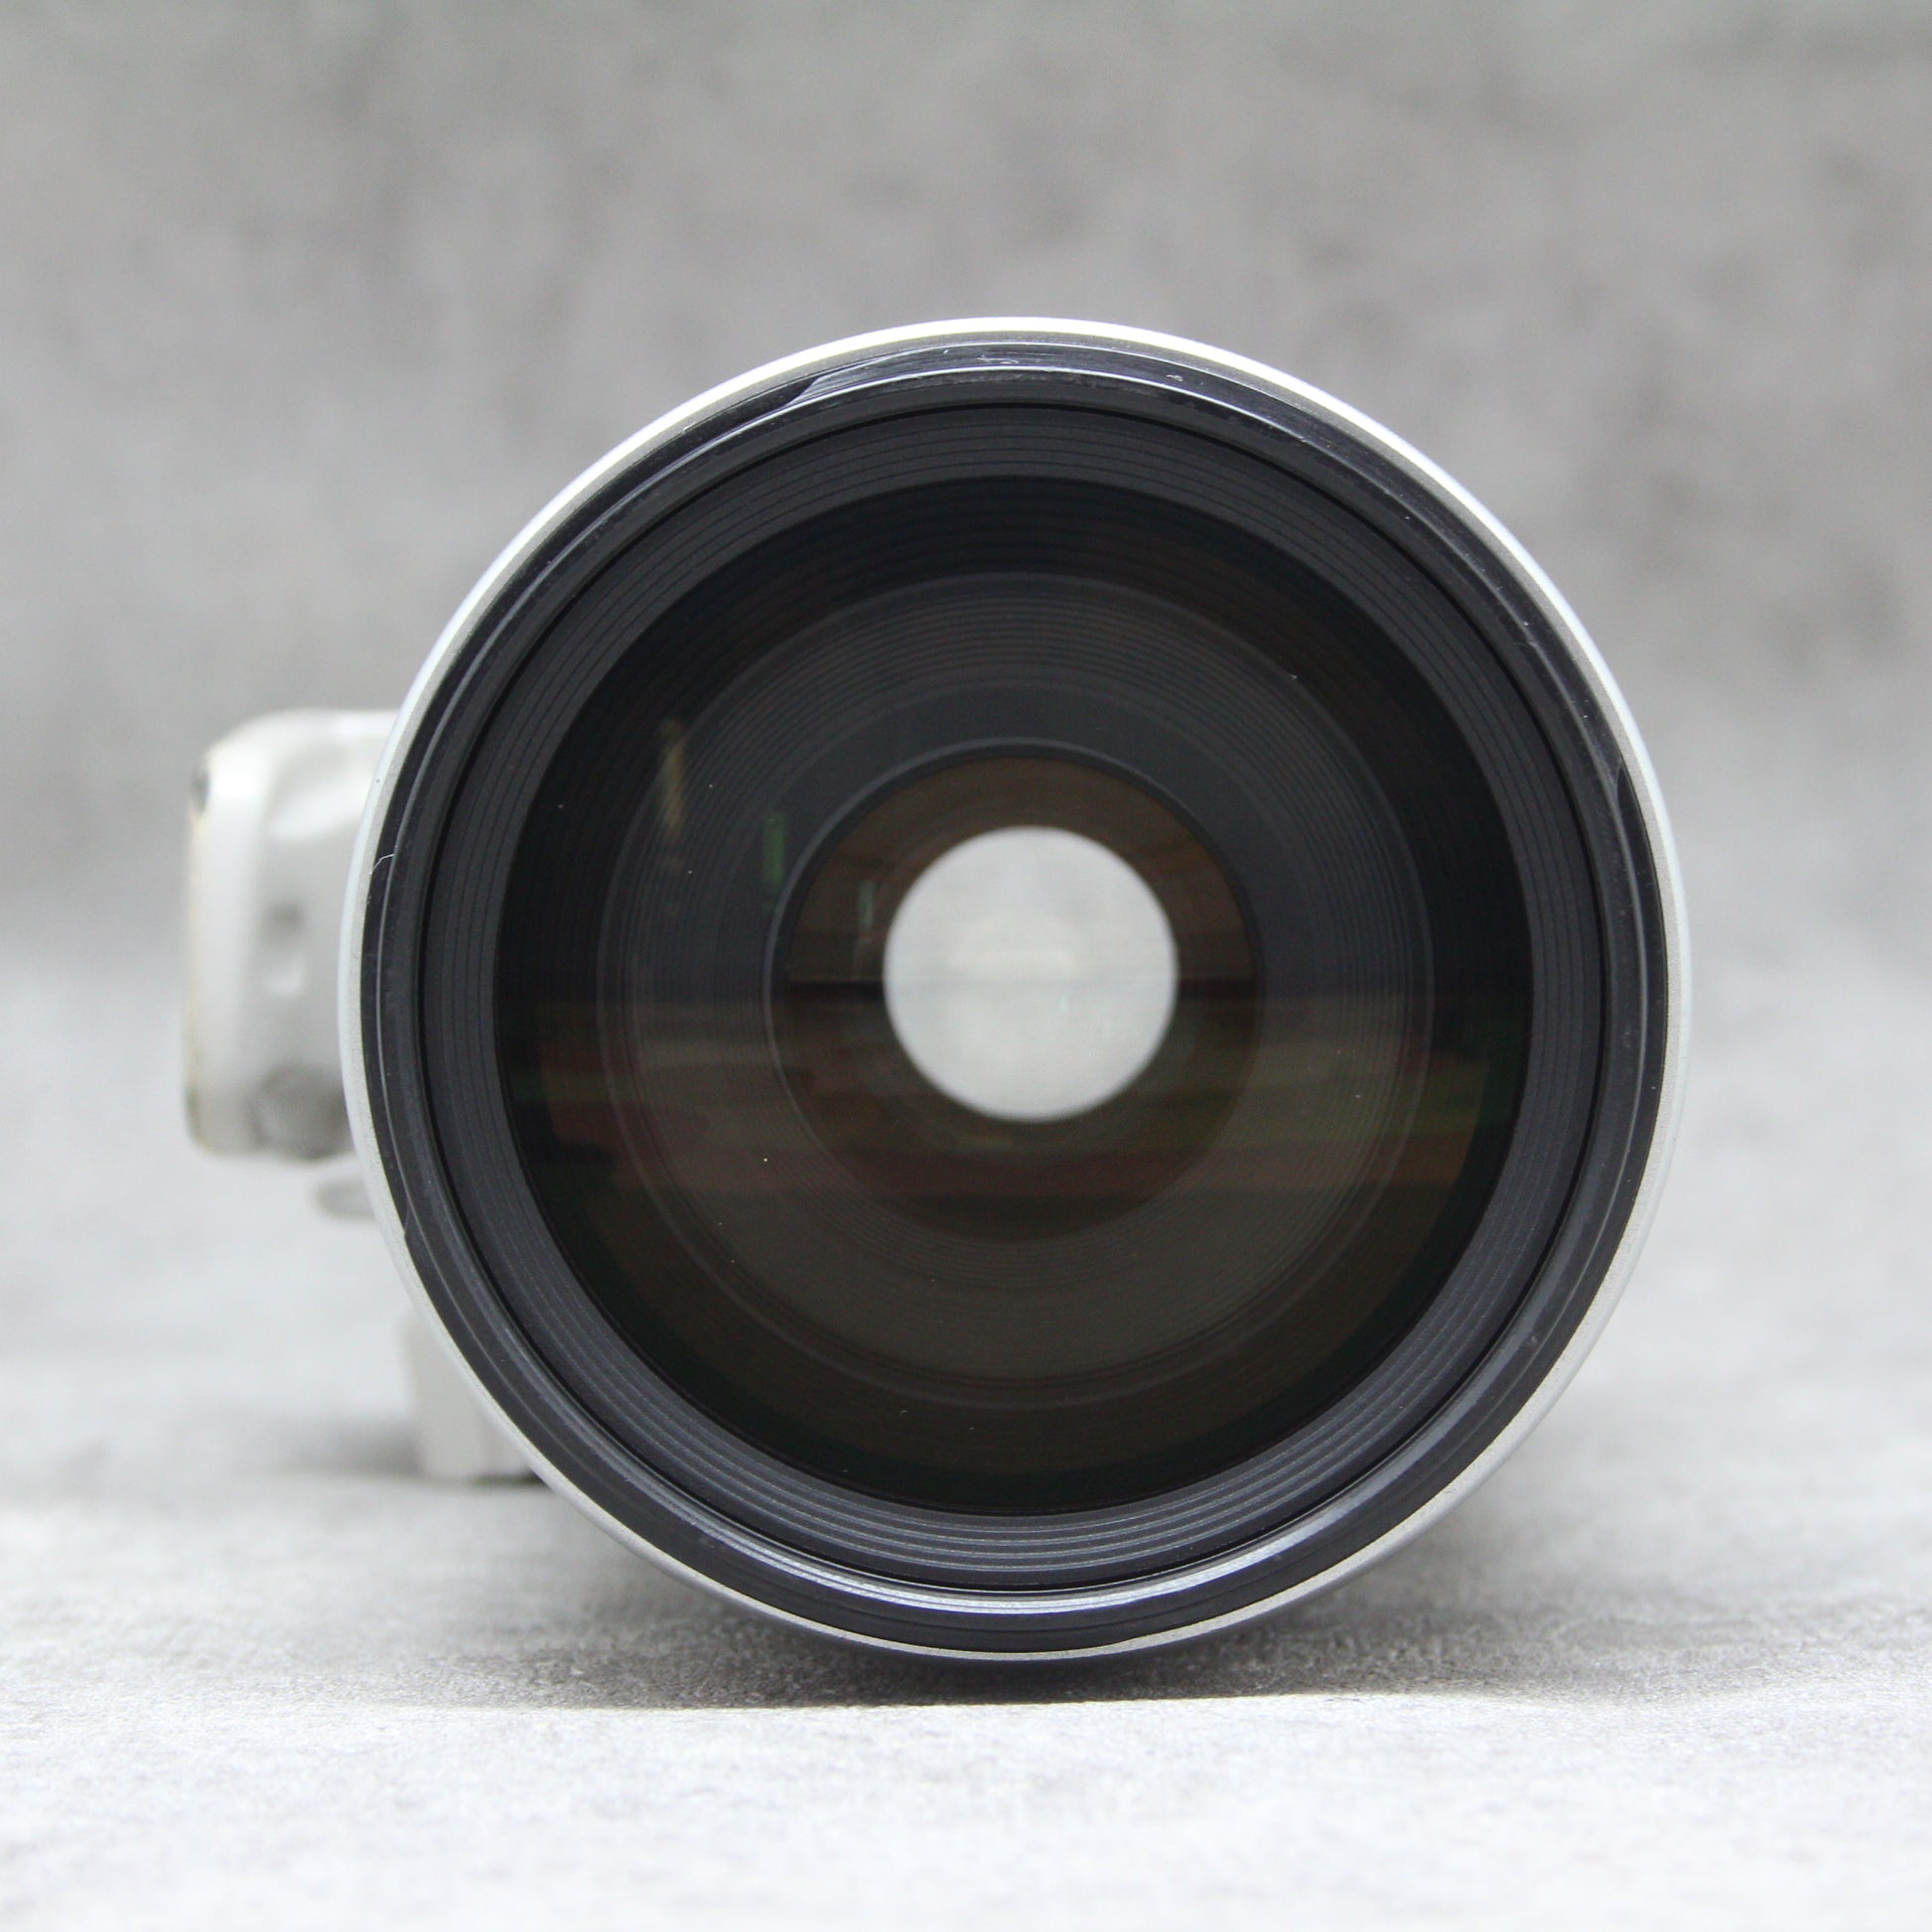 中古品 Canon EF 100-400mm F4.5-5.6 L IS USM【7月4日(火)のYouTube生配信でご紹介】